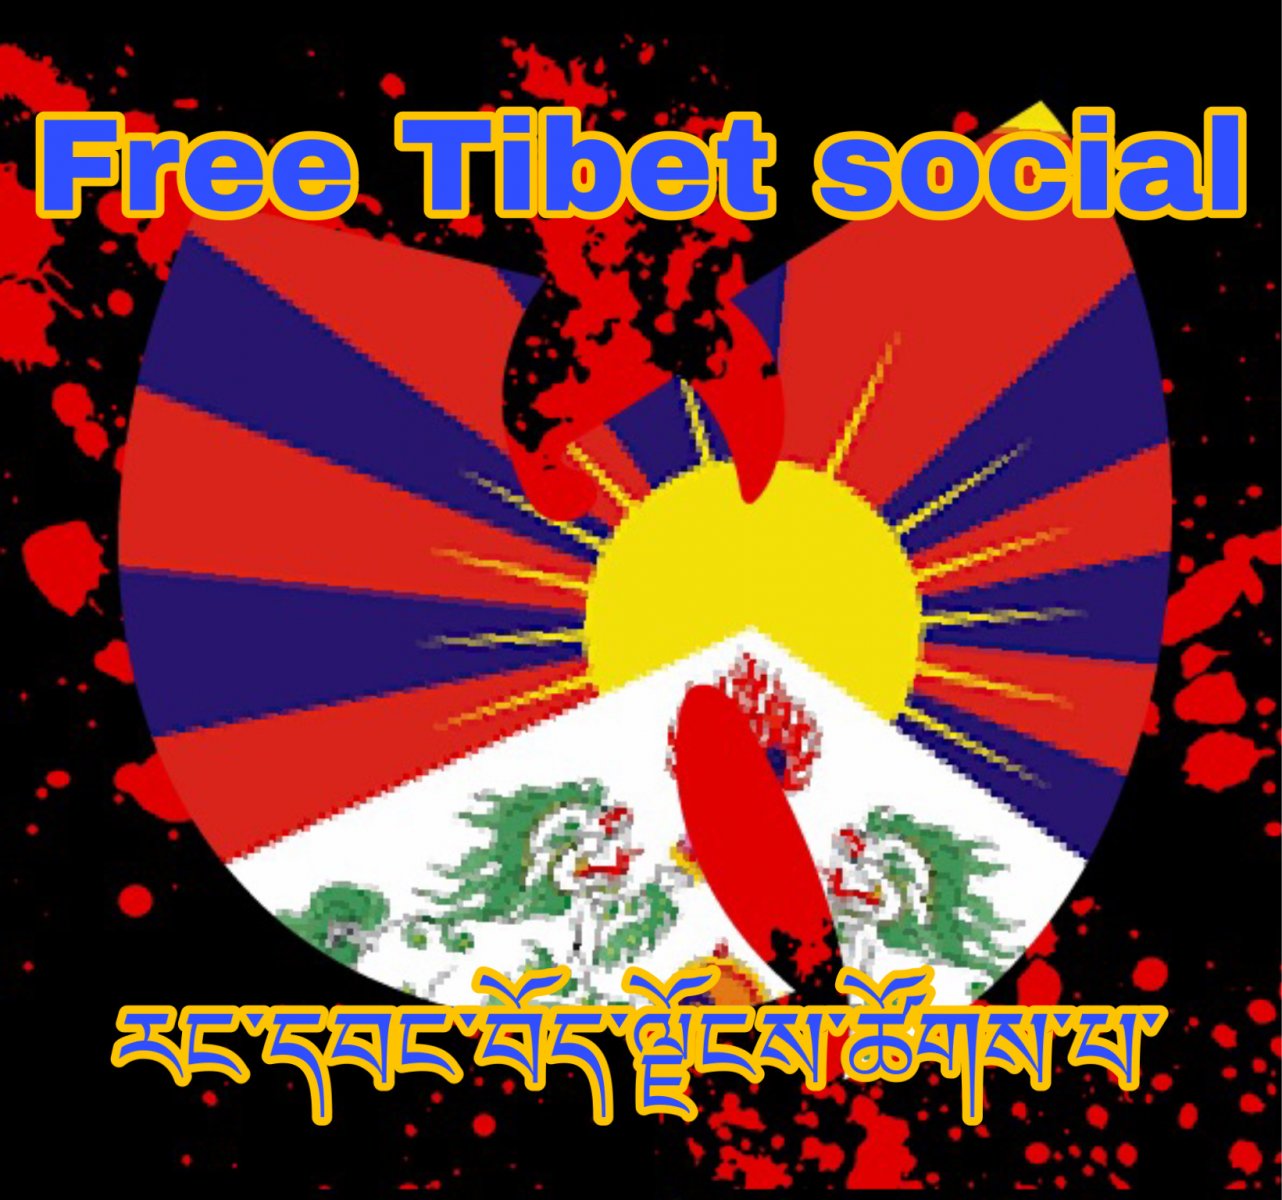 Free Tibet social